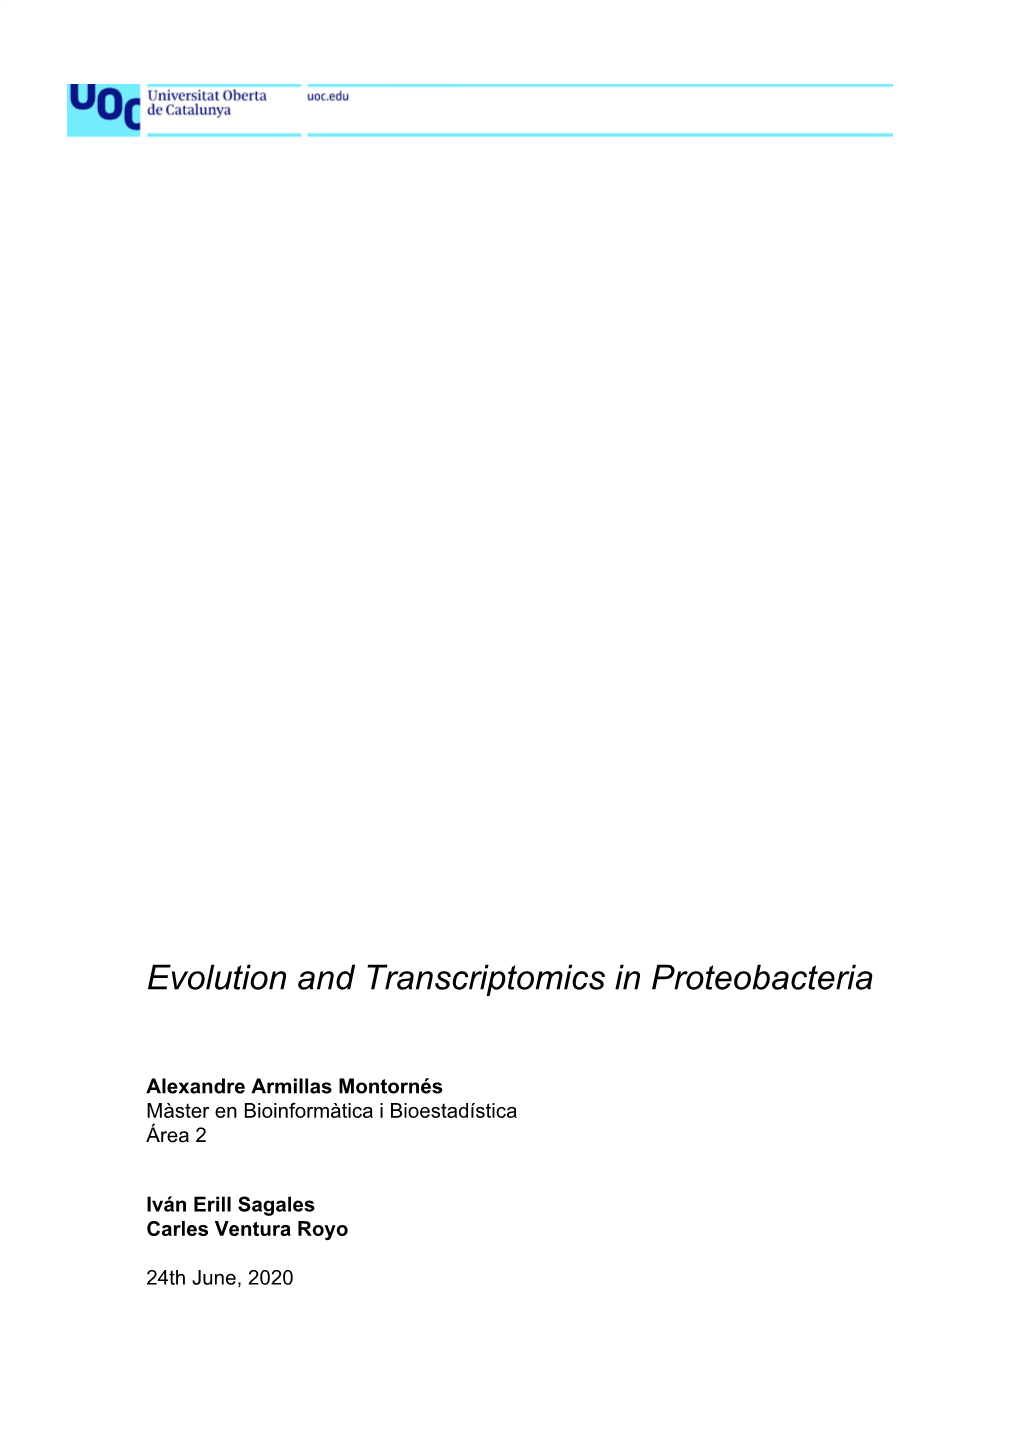 Evolution and Transcriptomics in Proteobacteria